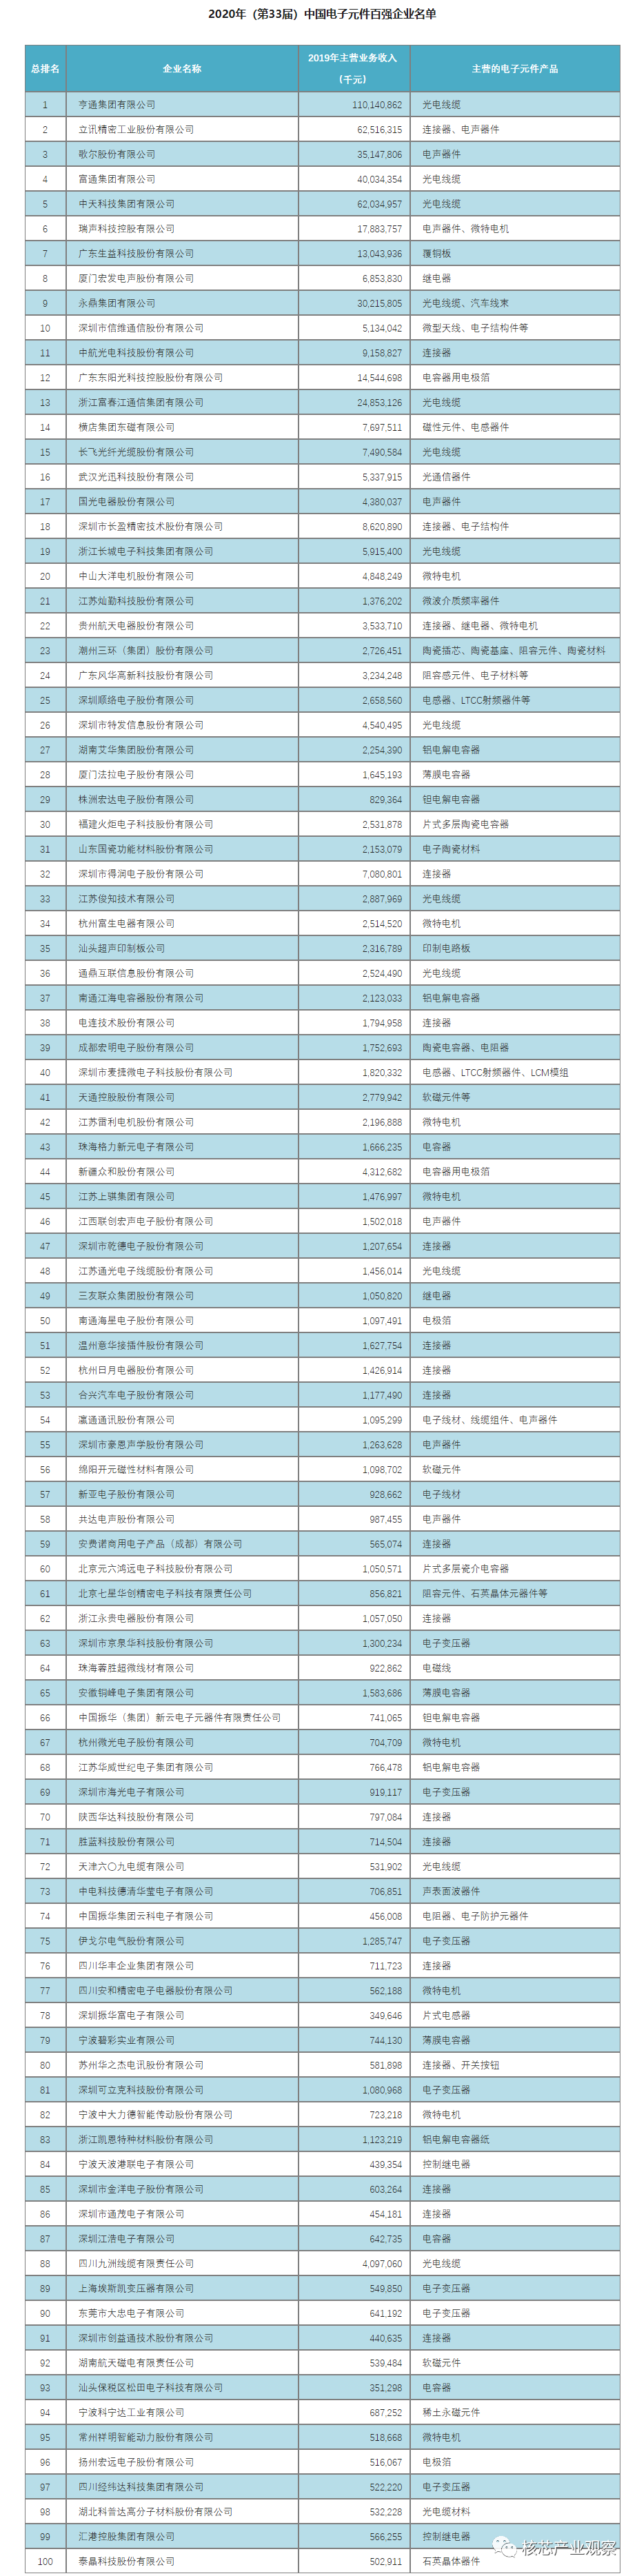 PG电子游戏官方网站2020年中国电子元件百强企业排名